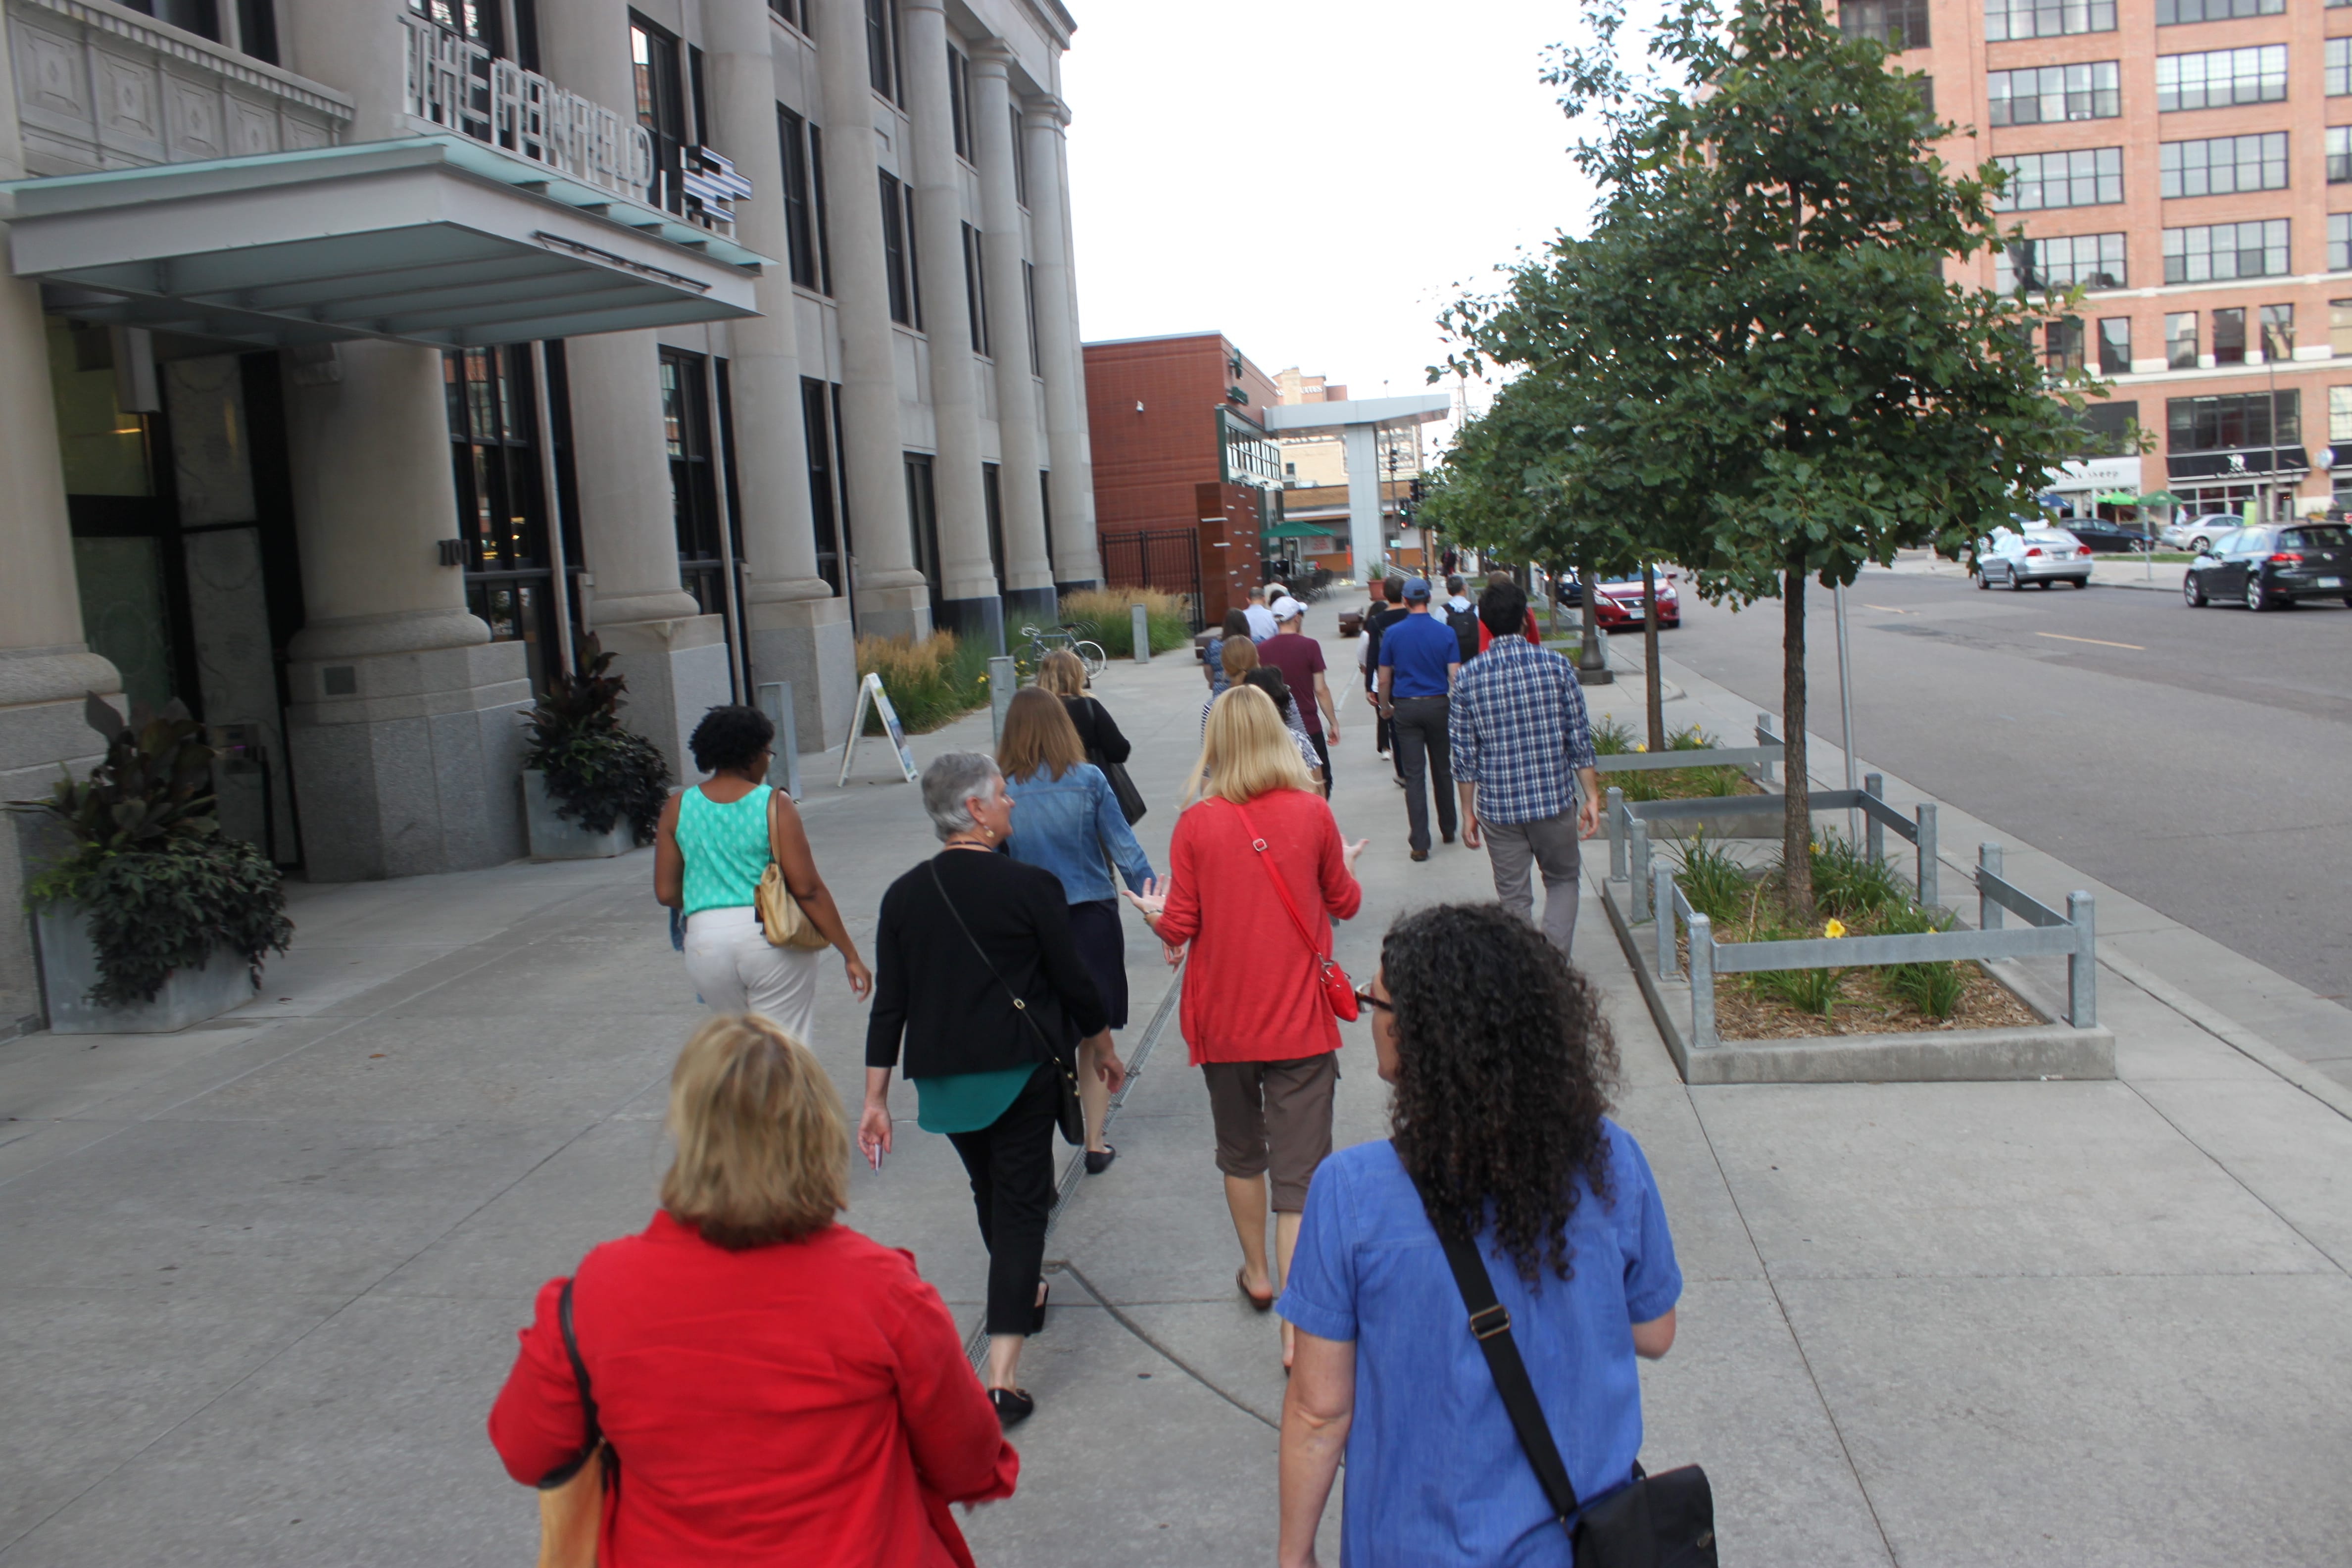 OTN members walking in St. Paul